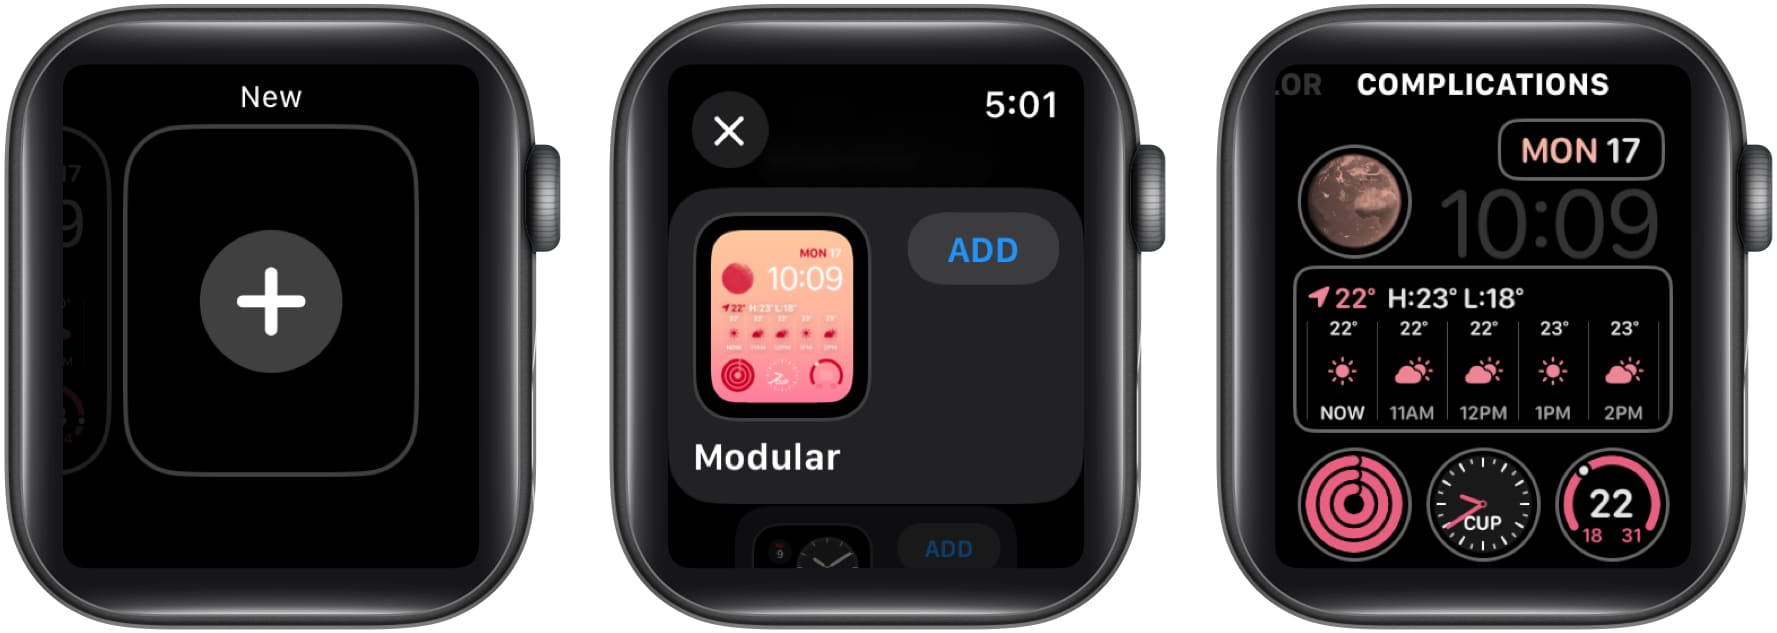 Complications menu to customize world clock on Apple Watch